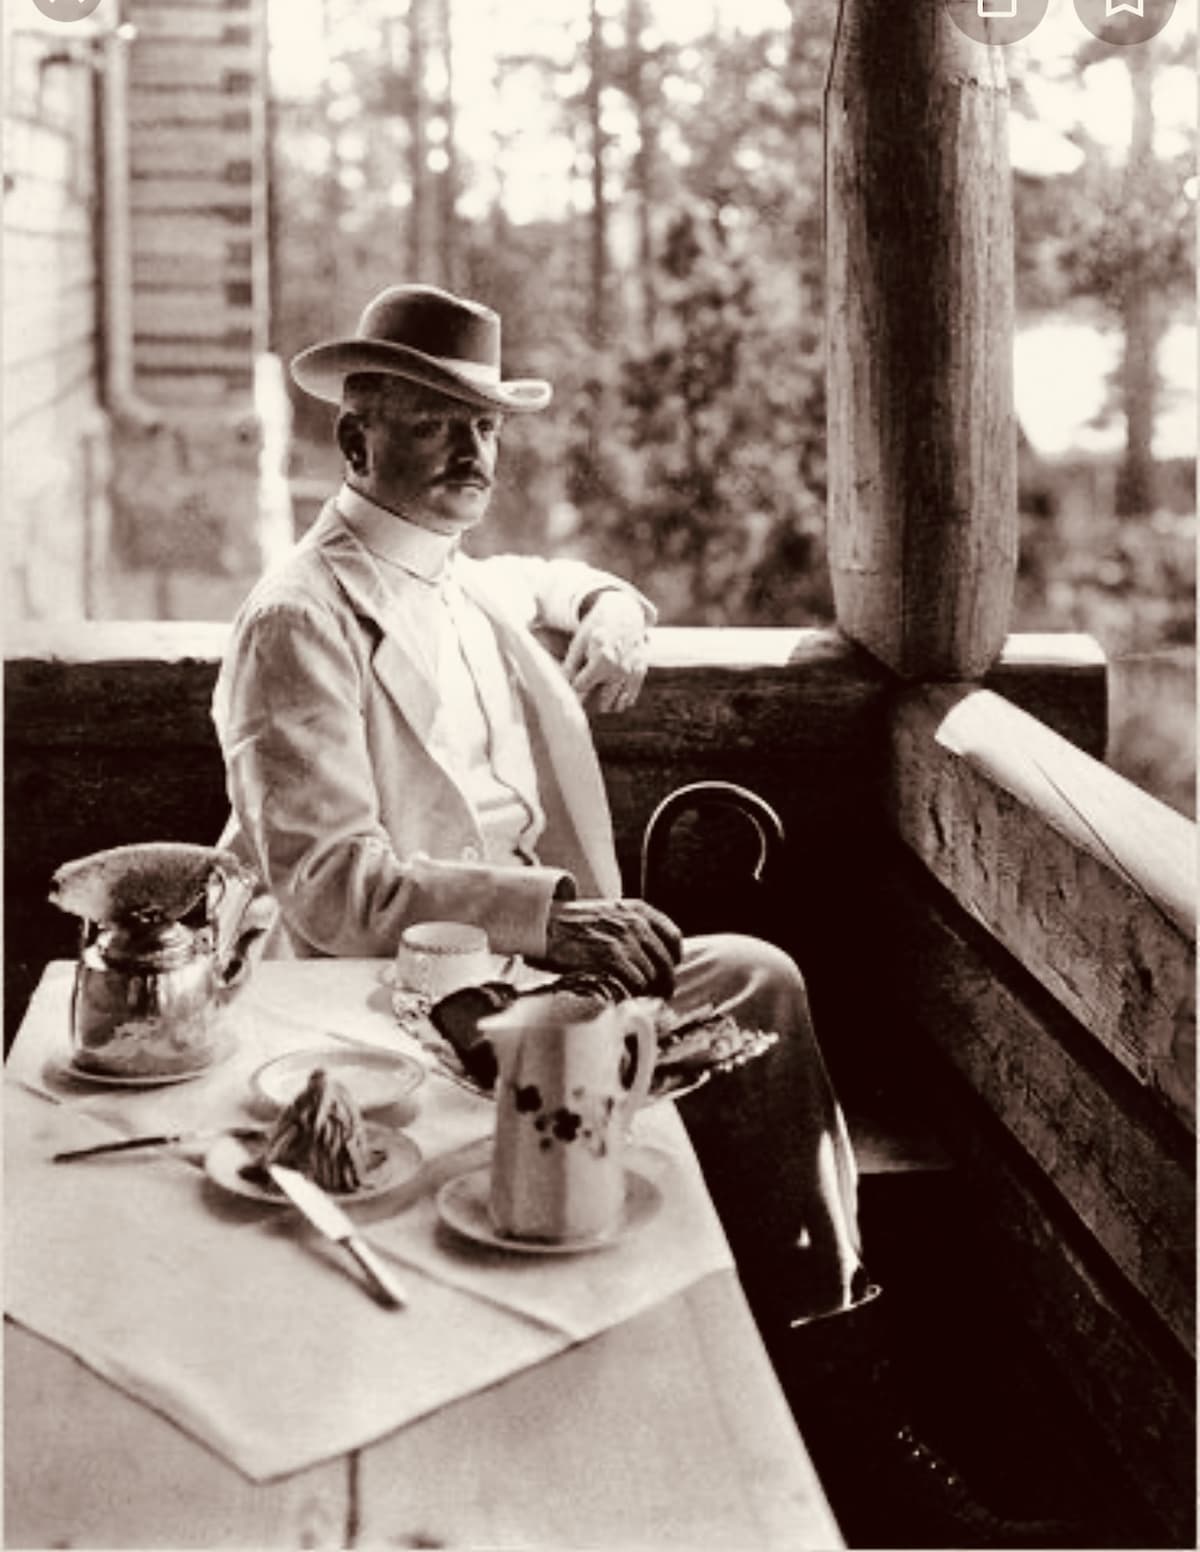 Composer Jean Sibelius having a tea